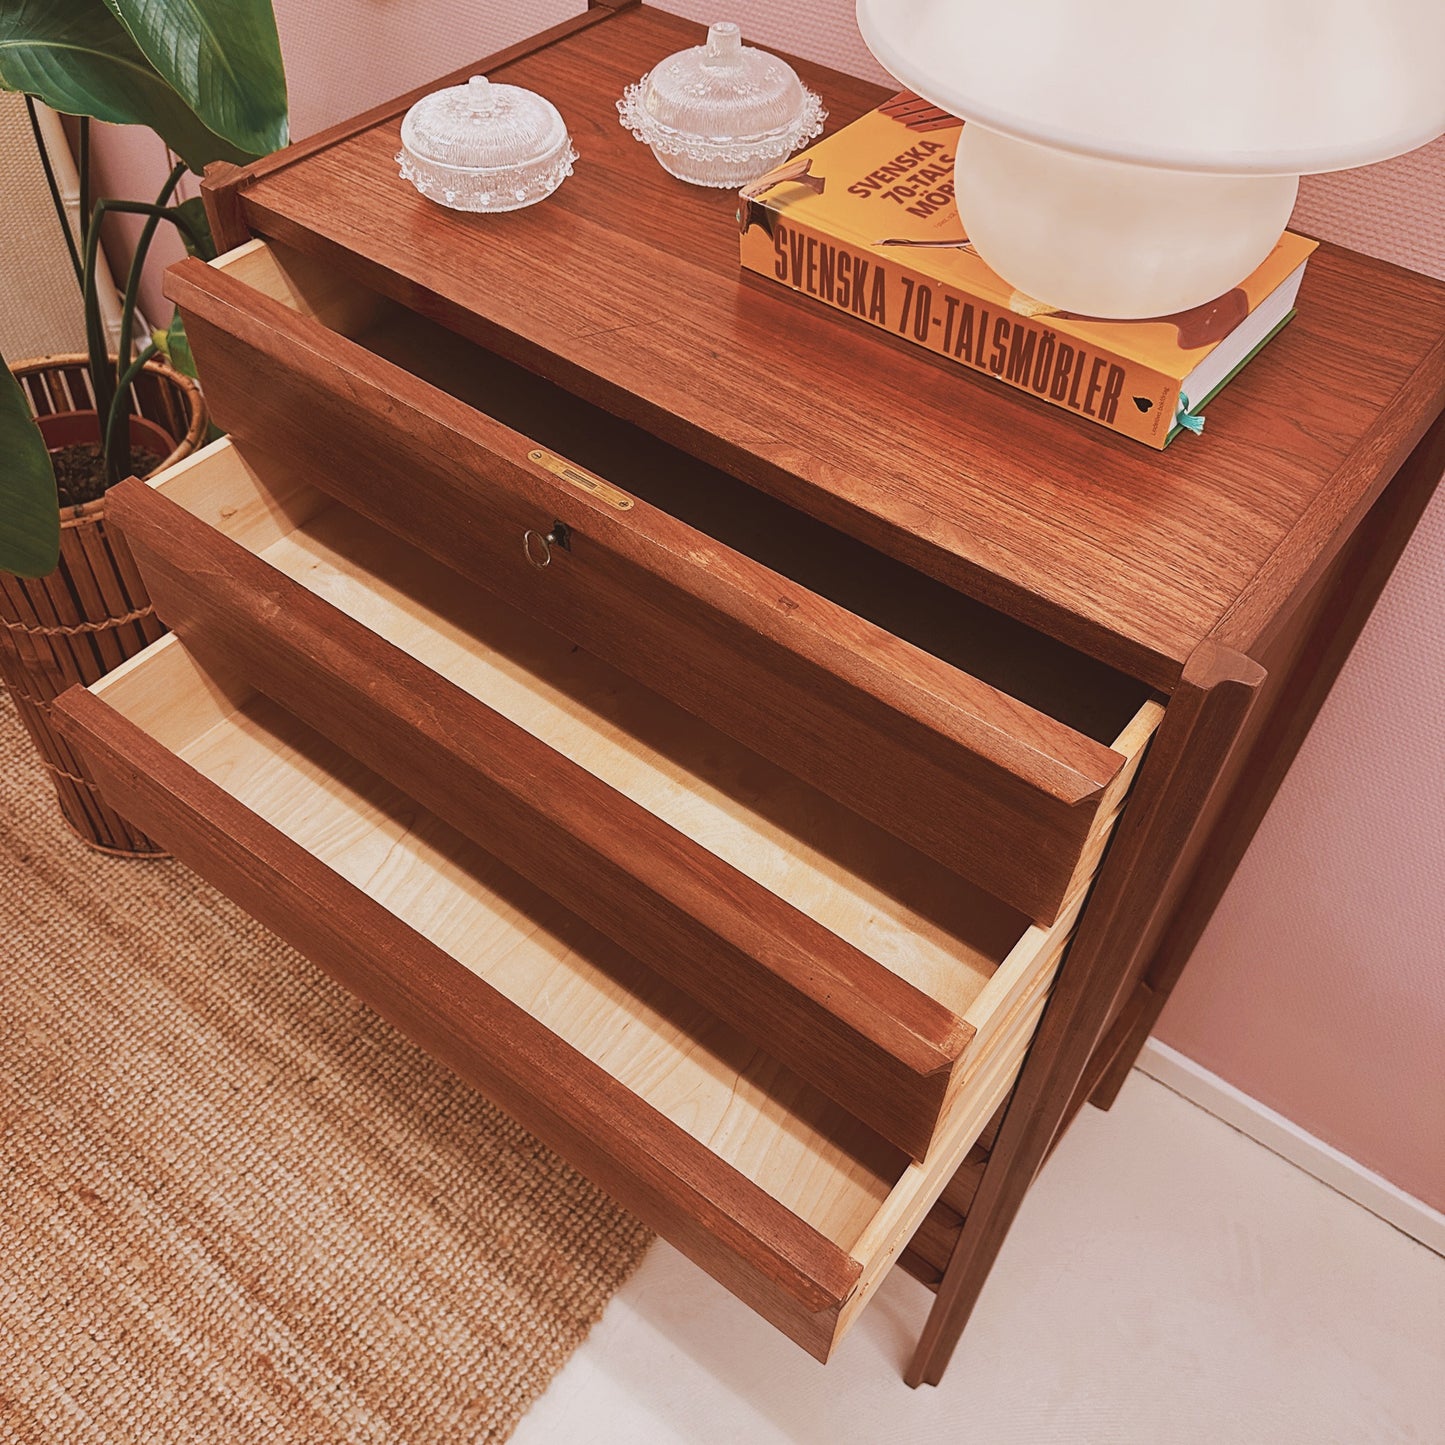 Danish chest of drawers made of teakwood